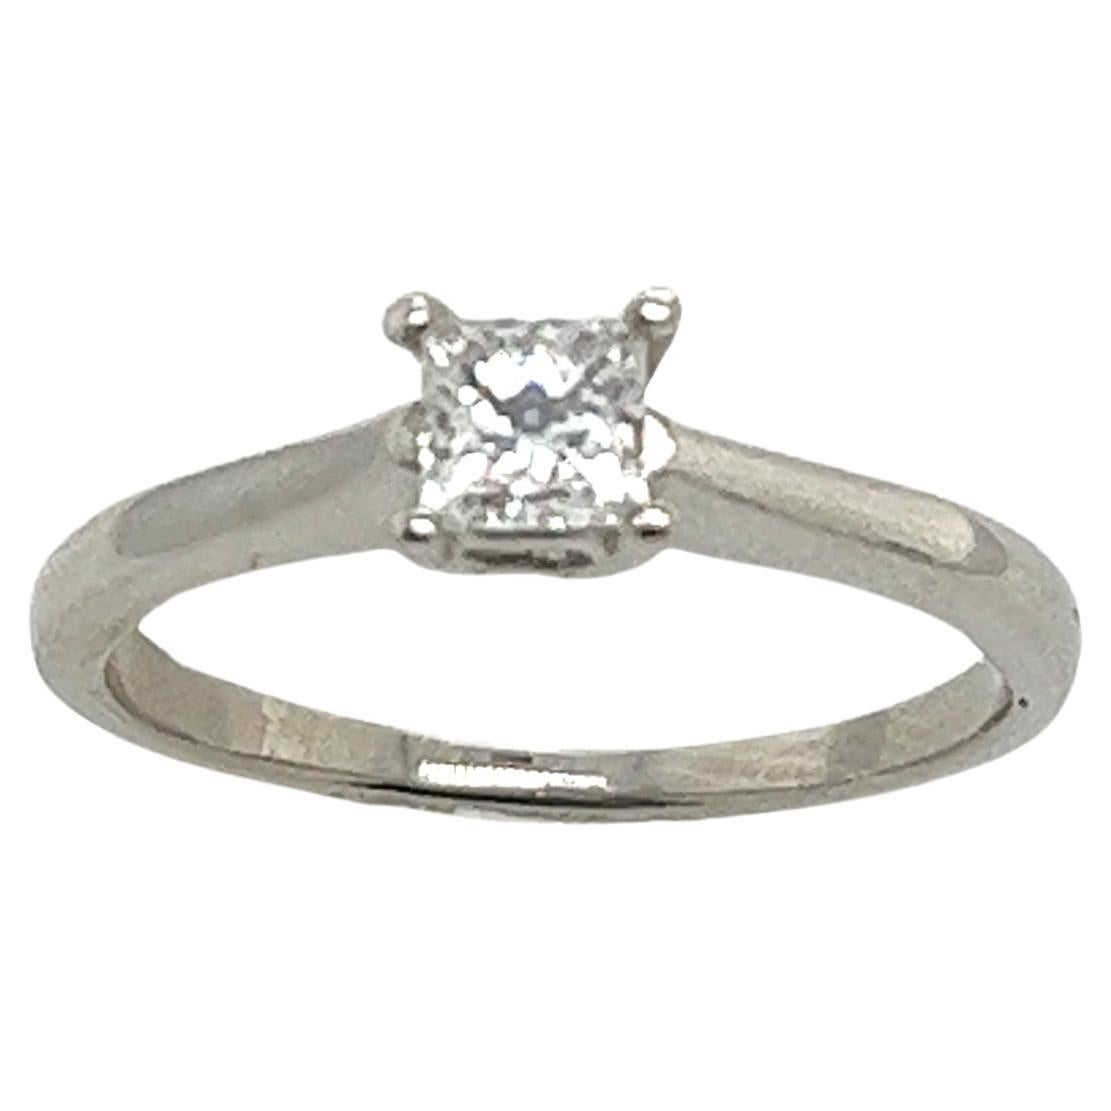 Platinum Solitaire Diamond Ring Set With 0.36ct E/VS1 Princess Cut Diamond